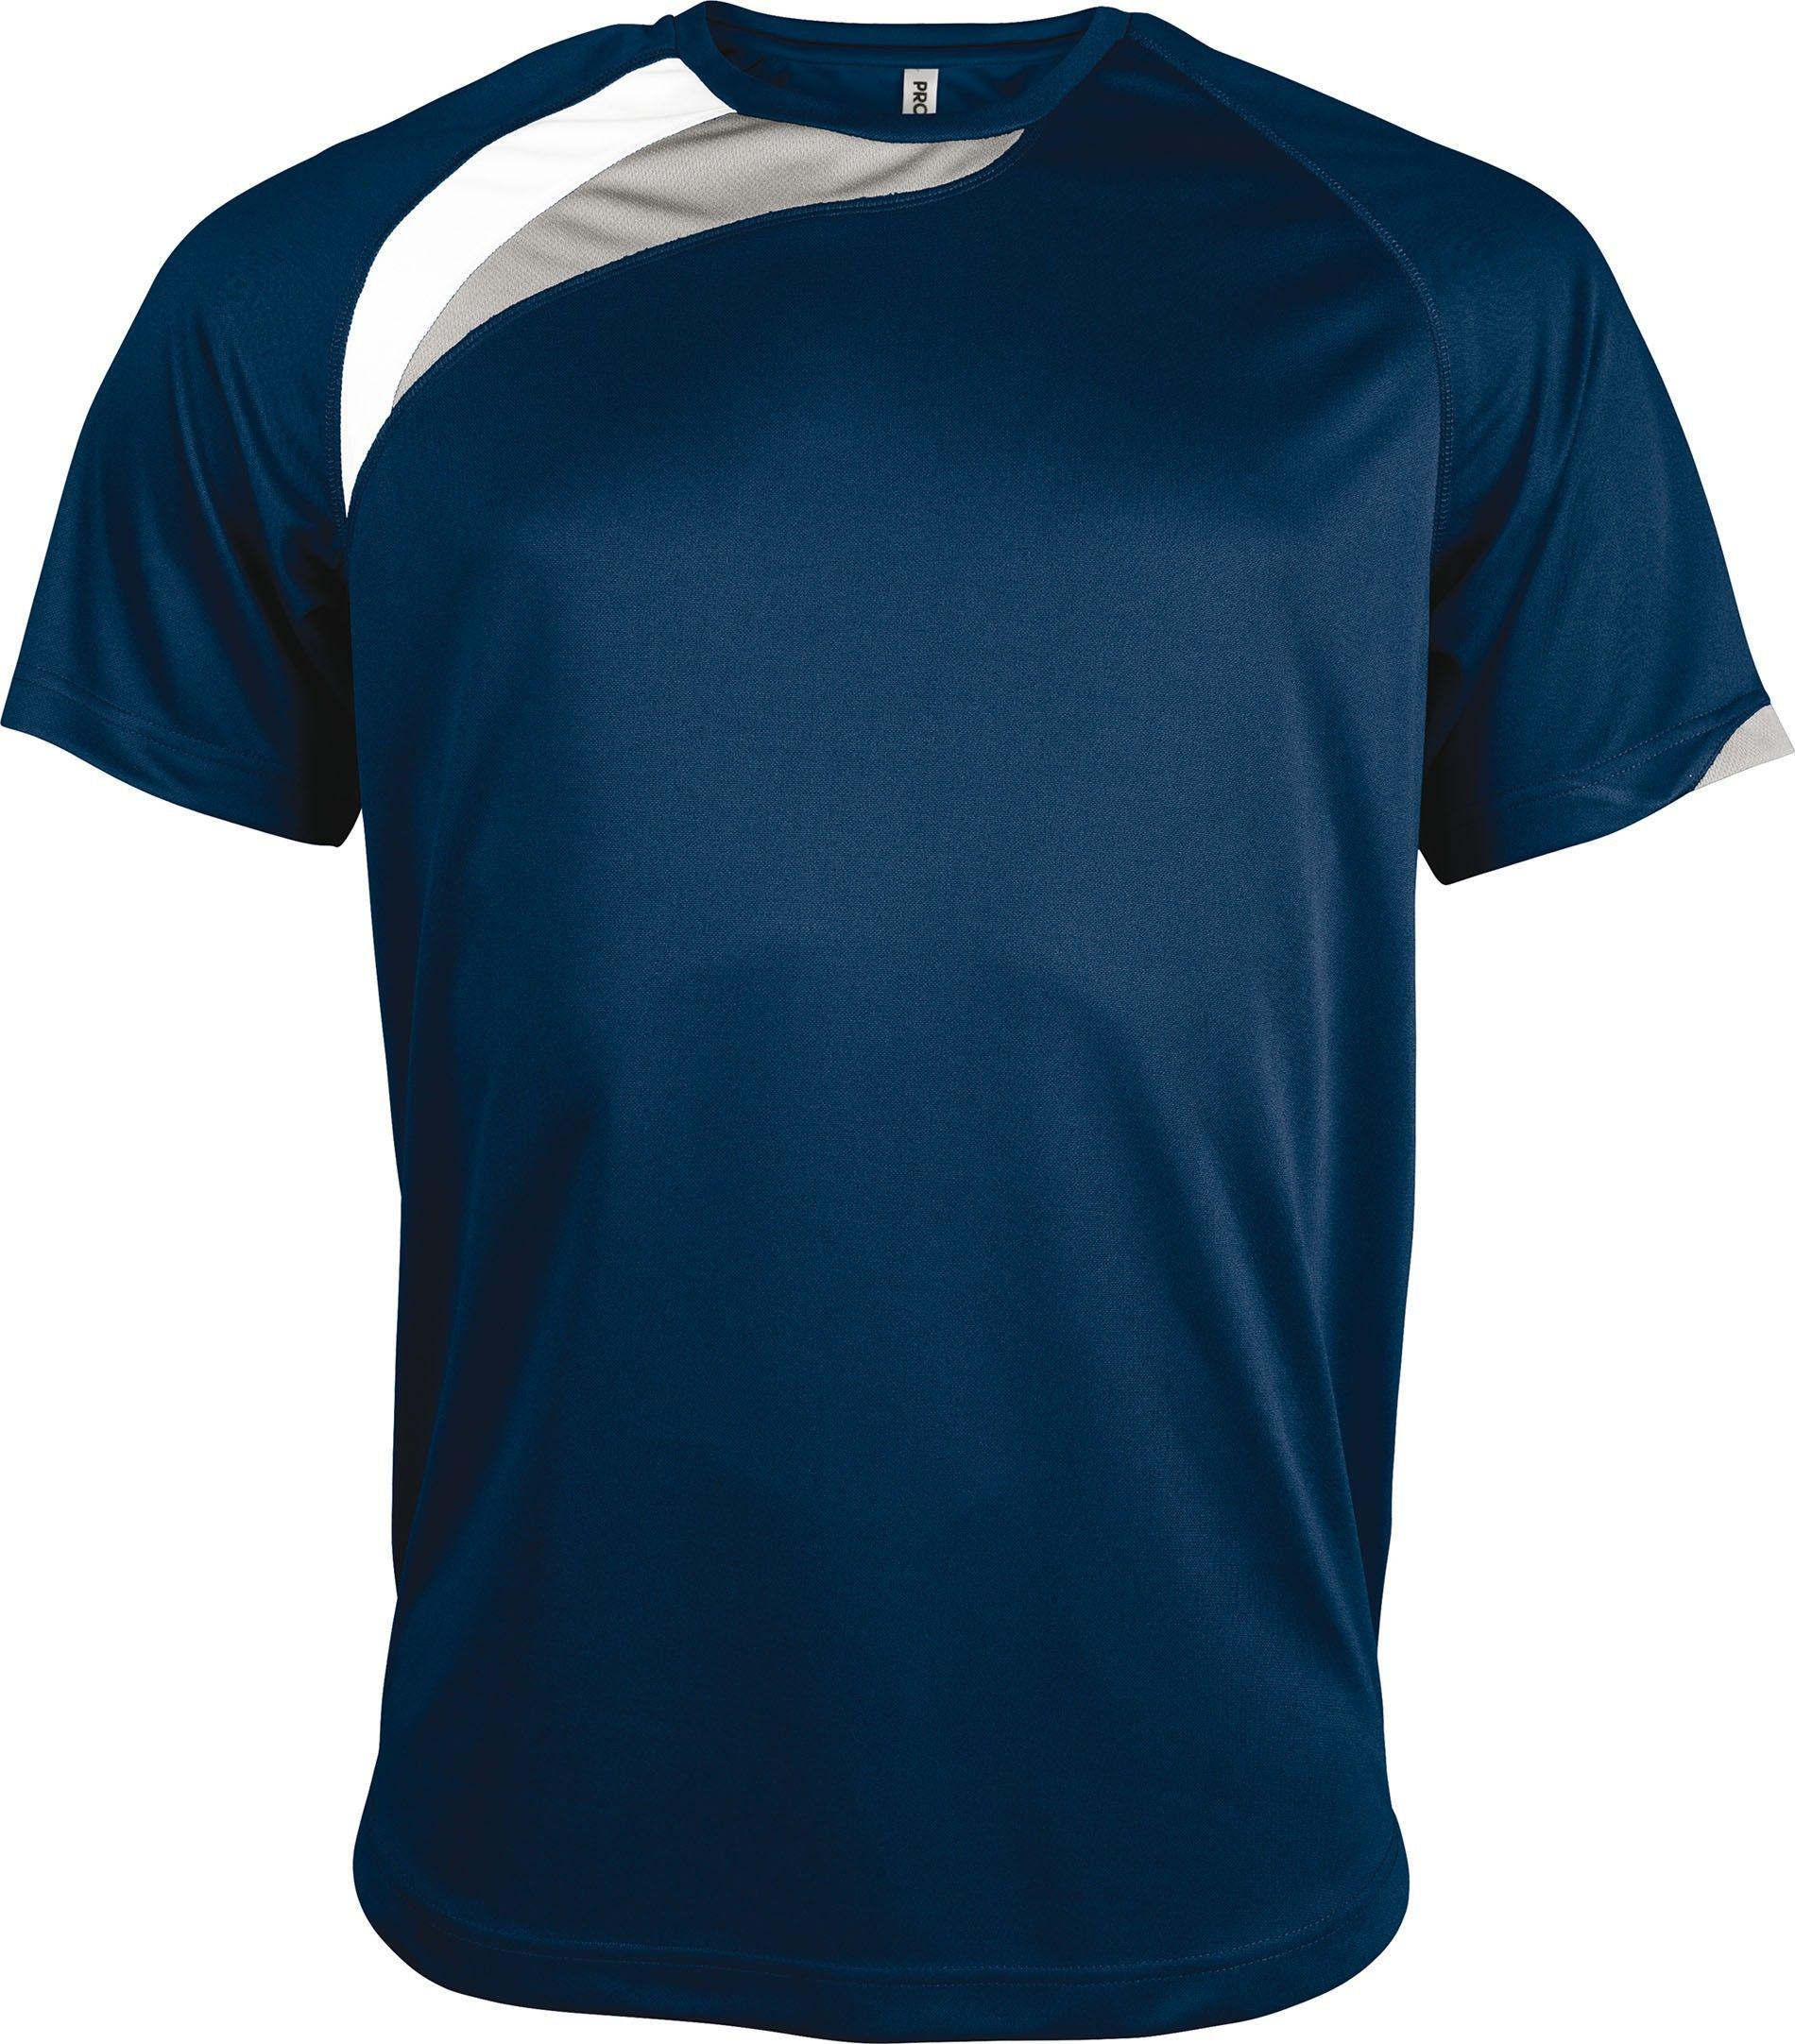 Navy and White Sports Logo - ProAct Shirt Sleeve Sports T-shirt, Sporty Navy/White/Storm ...